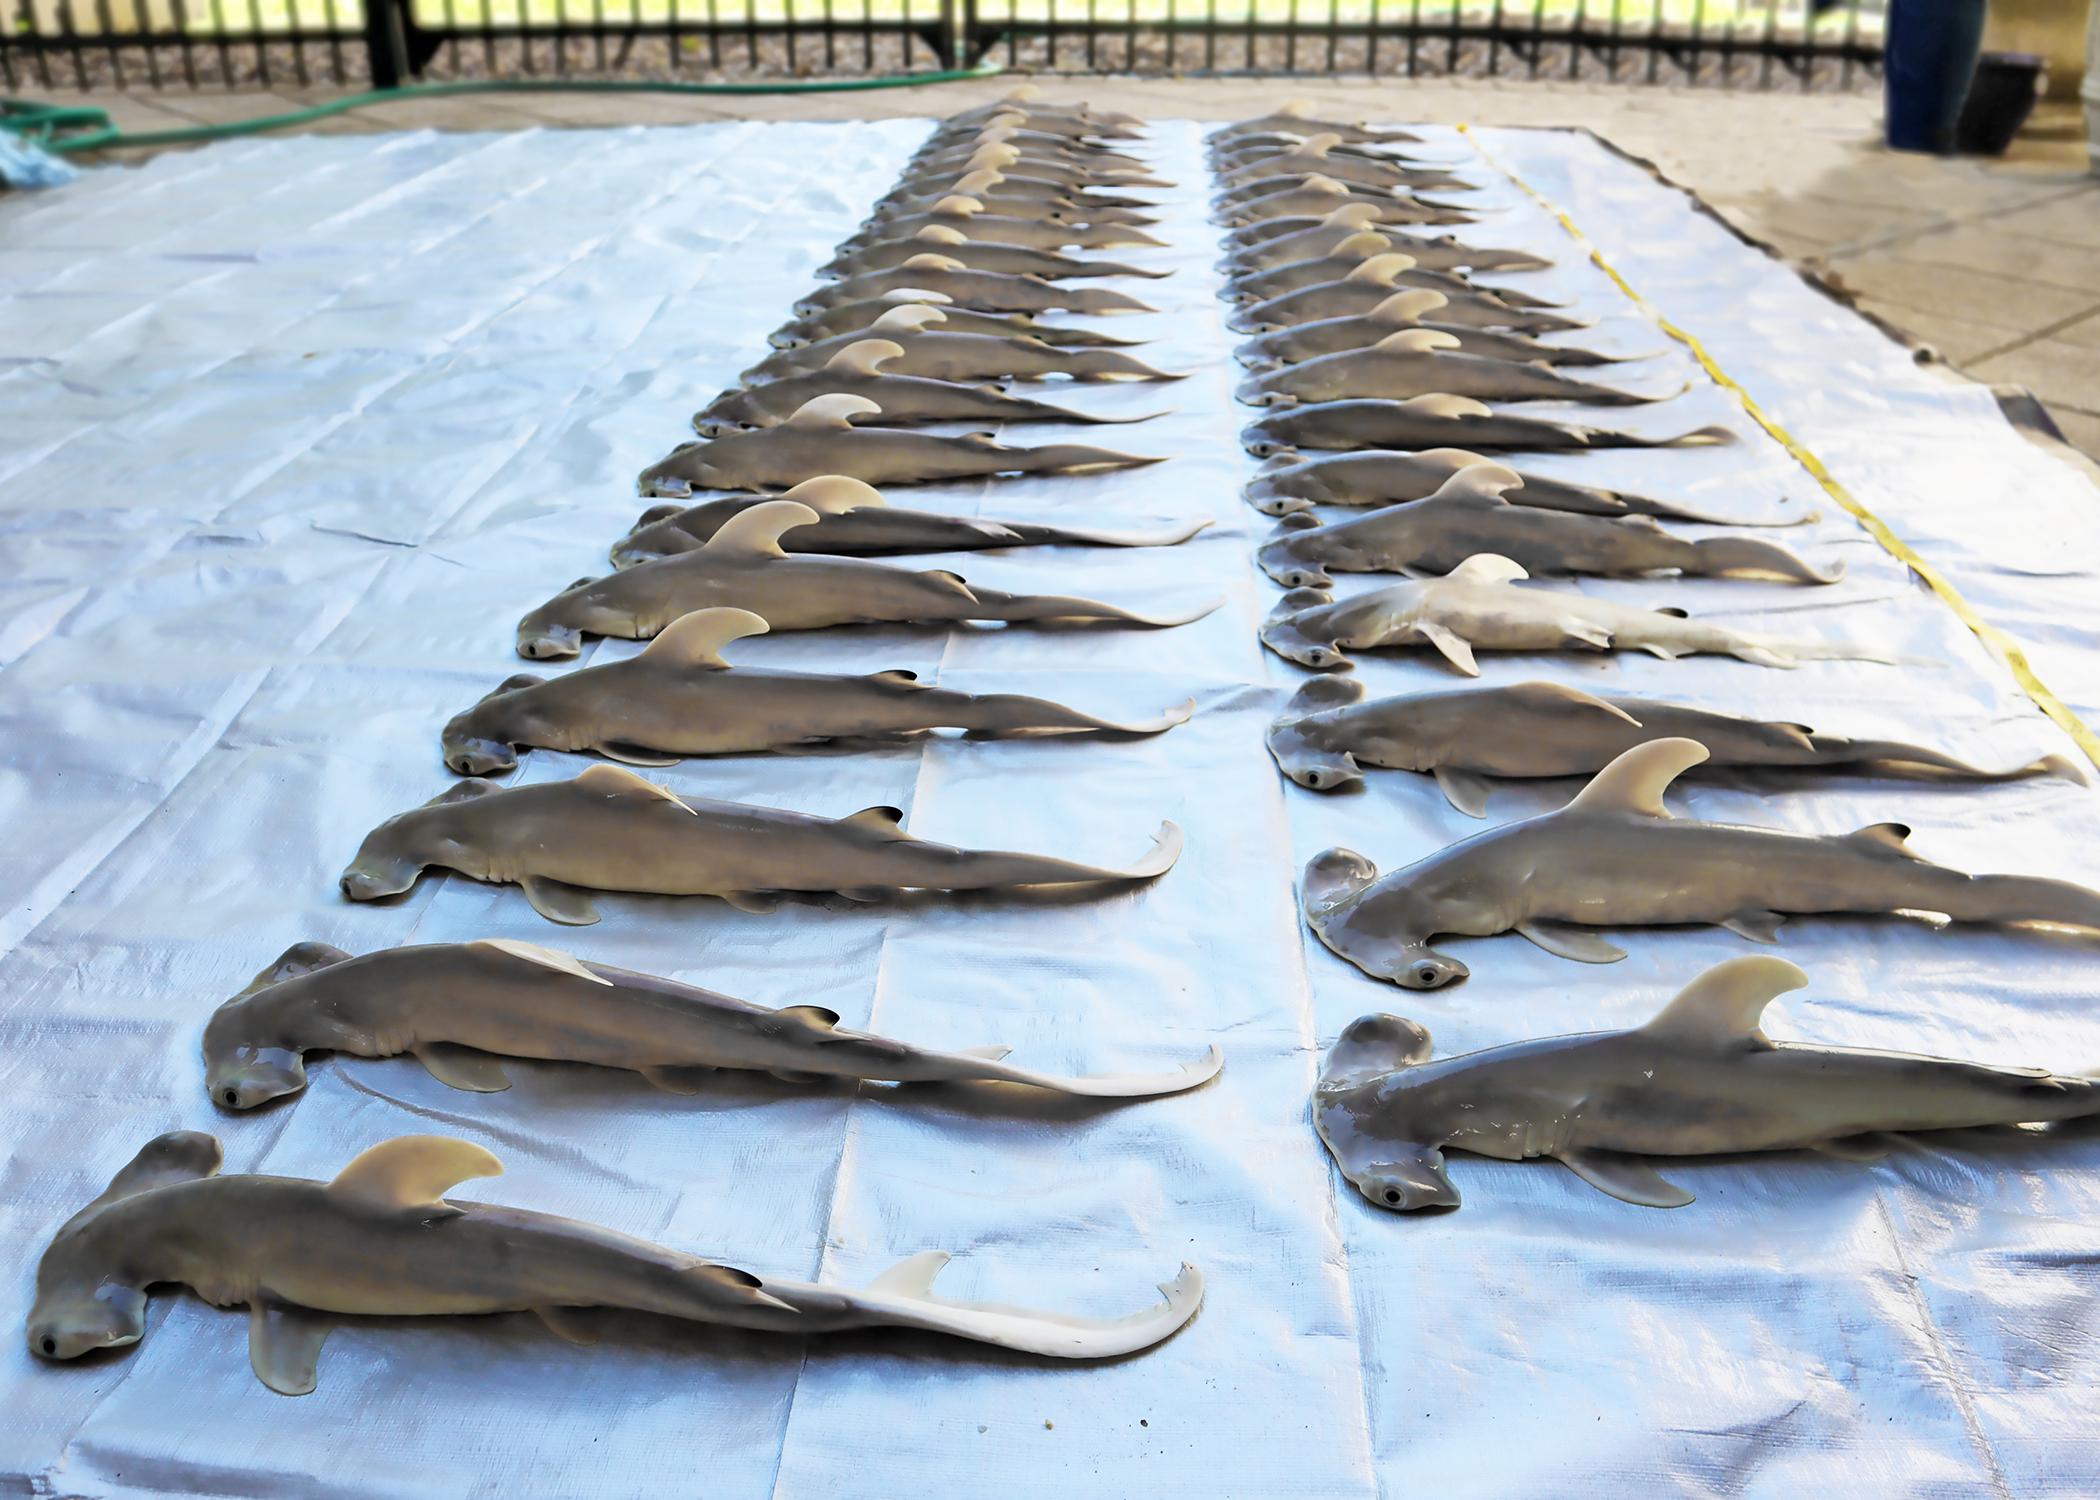 Fisheries experts examine great hammerhead shark